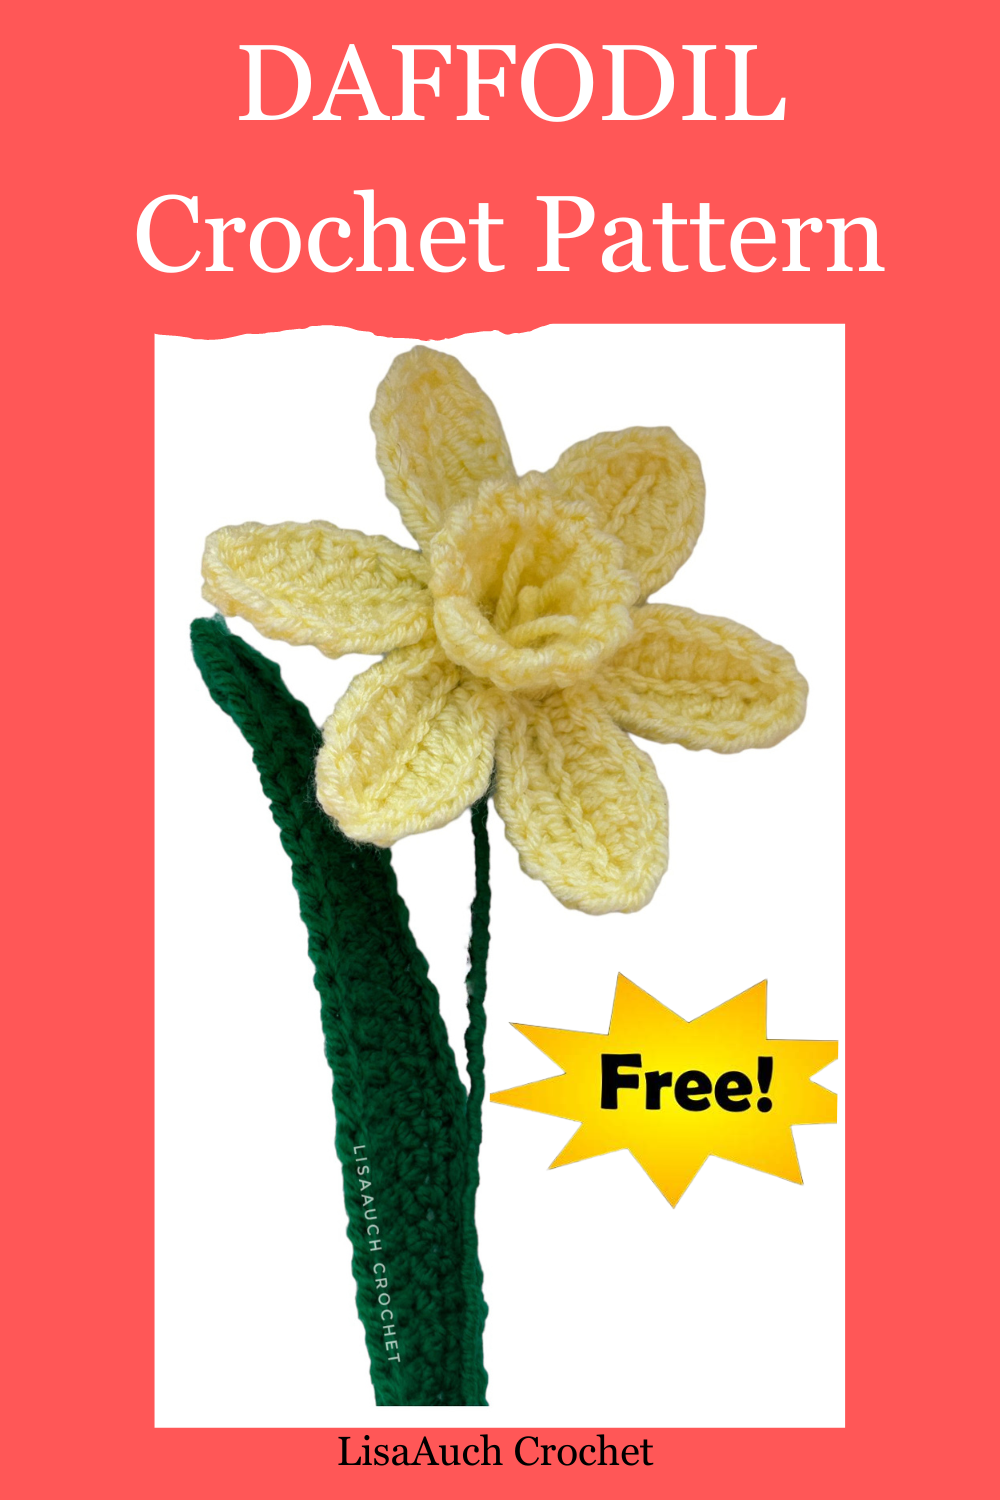 Dafodil crochet pattern, crochet dafodil,free crochet dafodil patterns, crochet daffodil pattern free